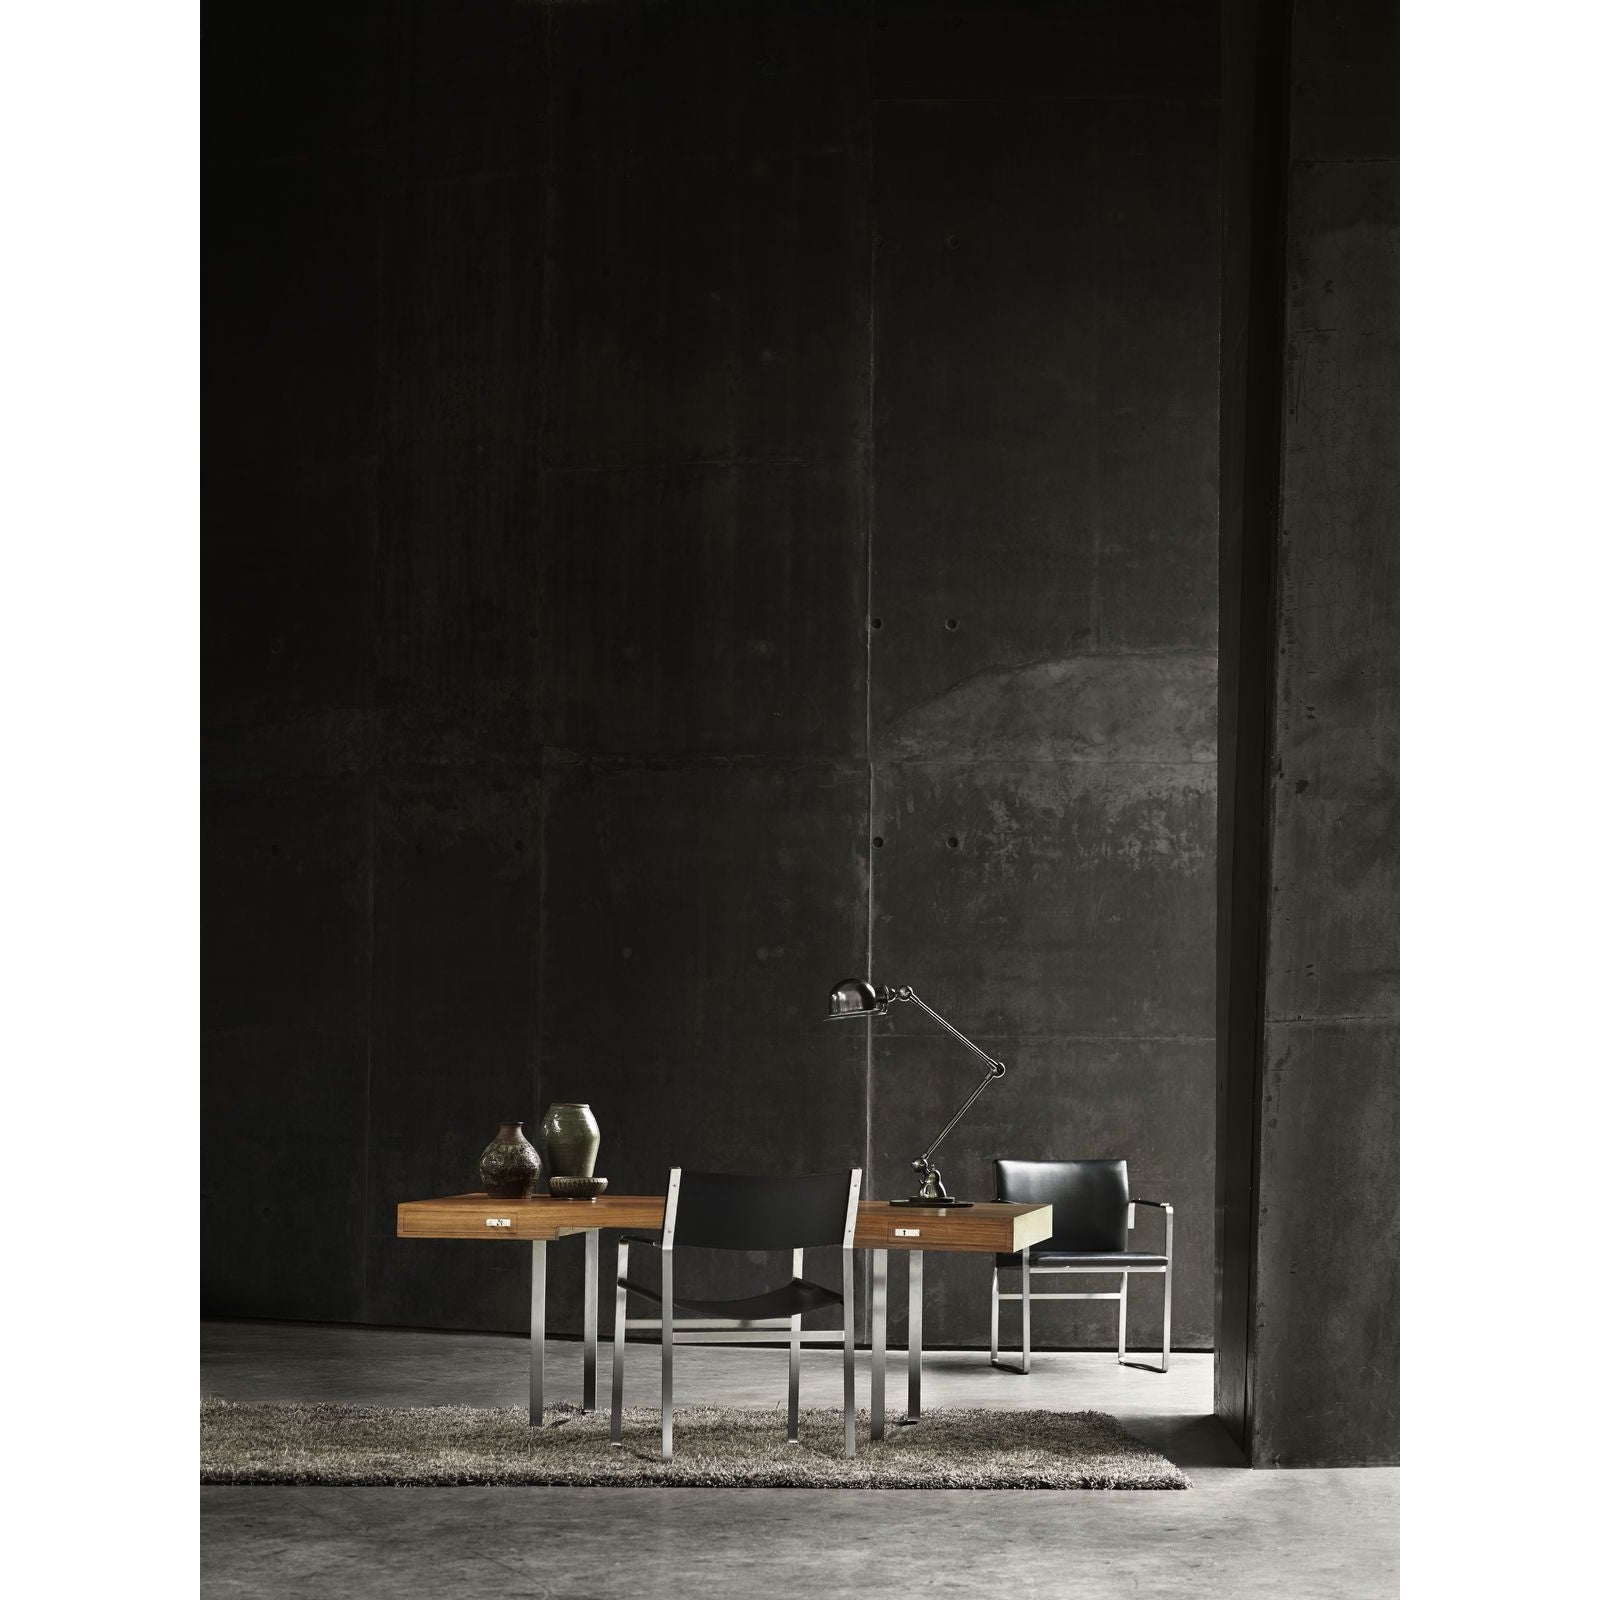 Carl Hansen Ch111 Chair, Steel/Black Leather